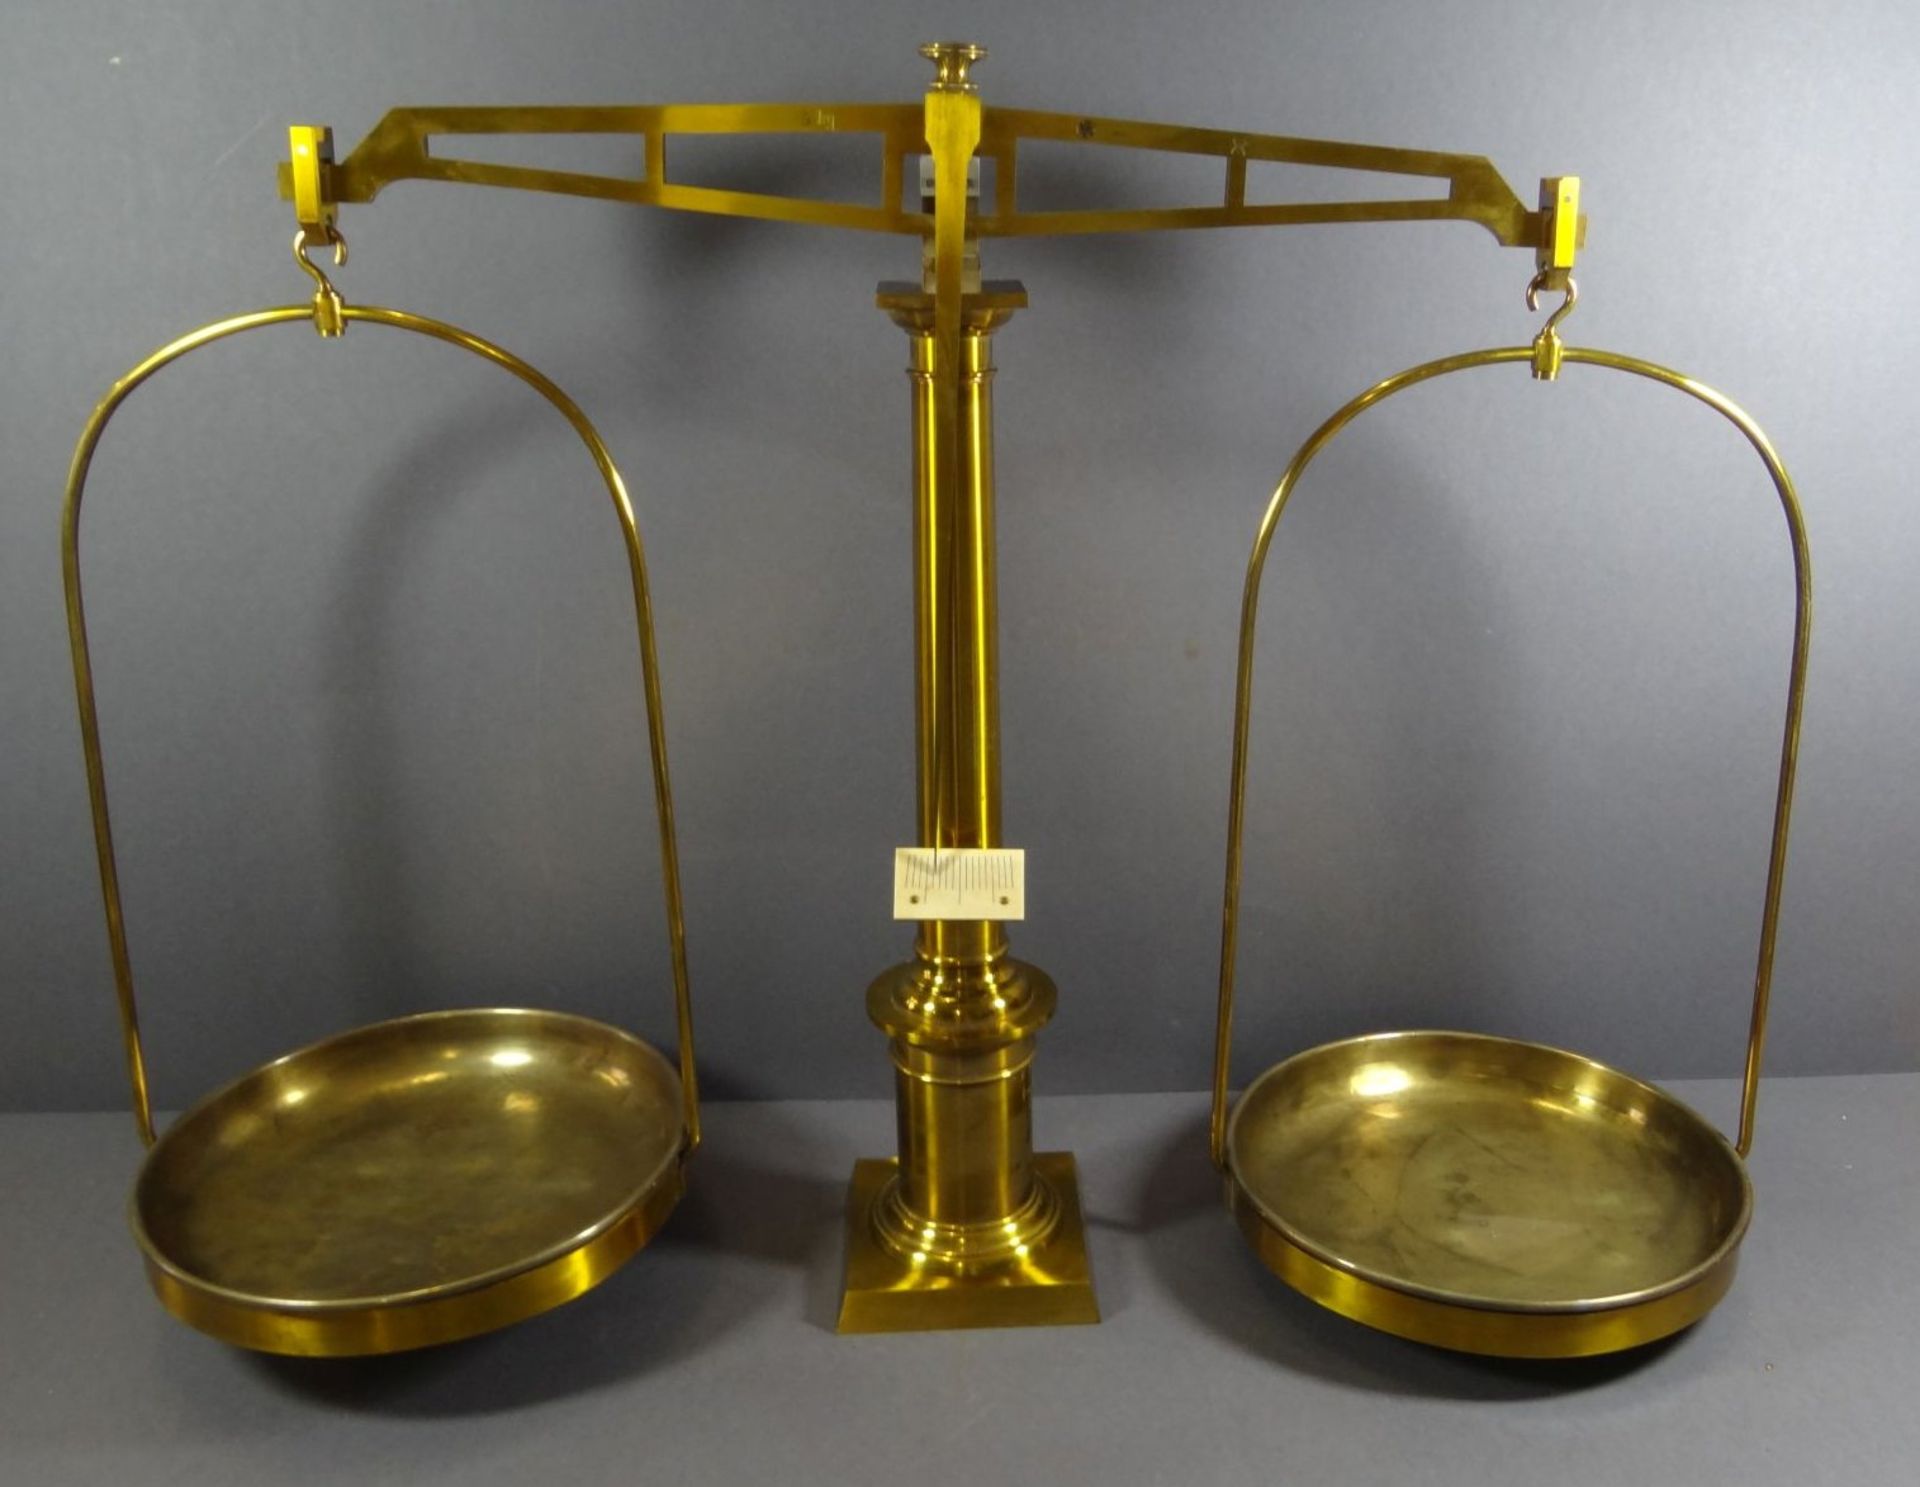 Apothekenwaage bis 5 kg, Messing,dat. 1878, Eichstempel, H-50 cm, B-70 cm